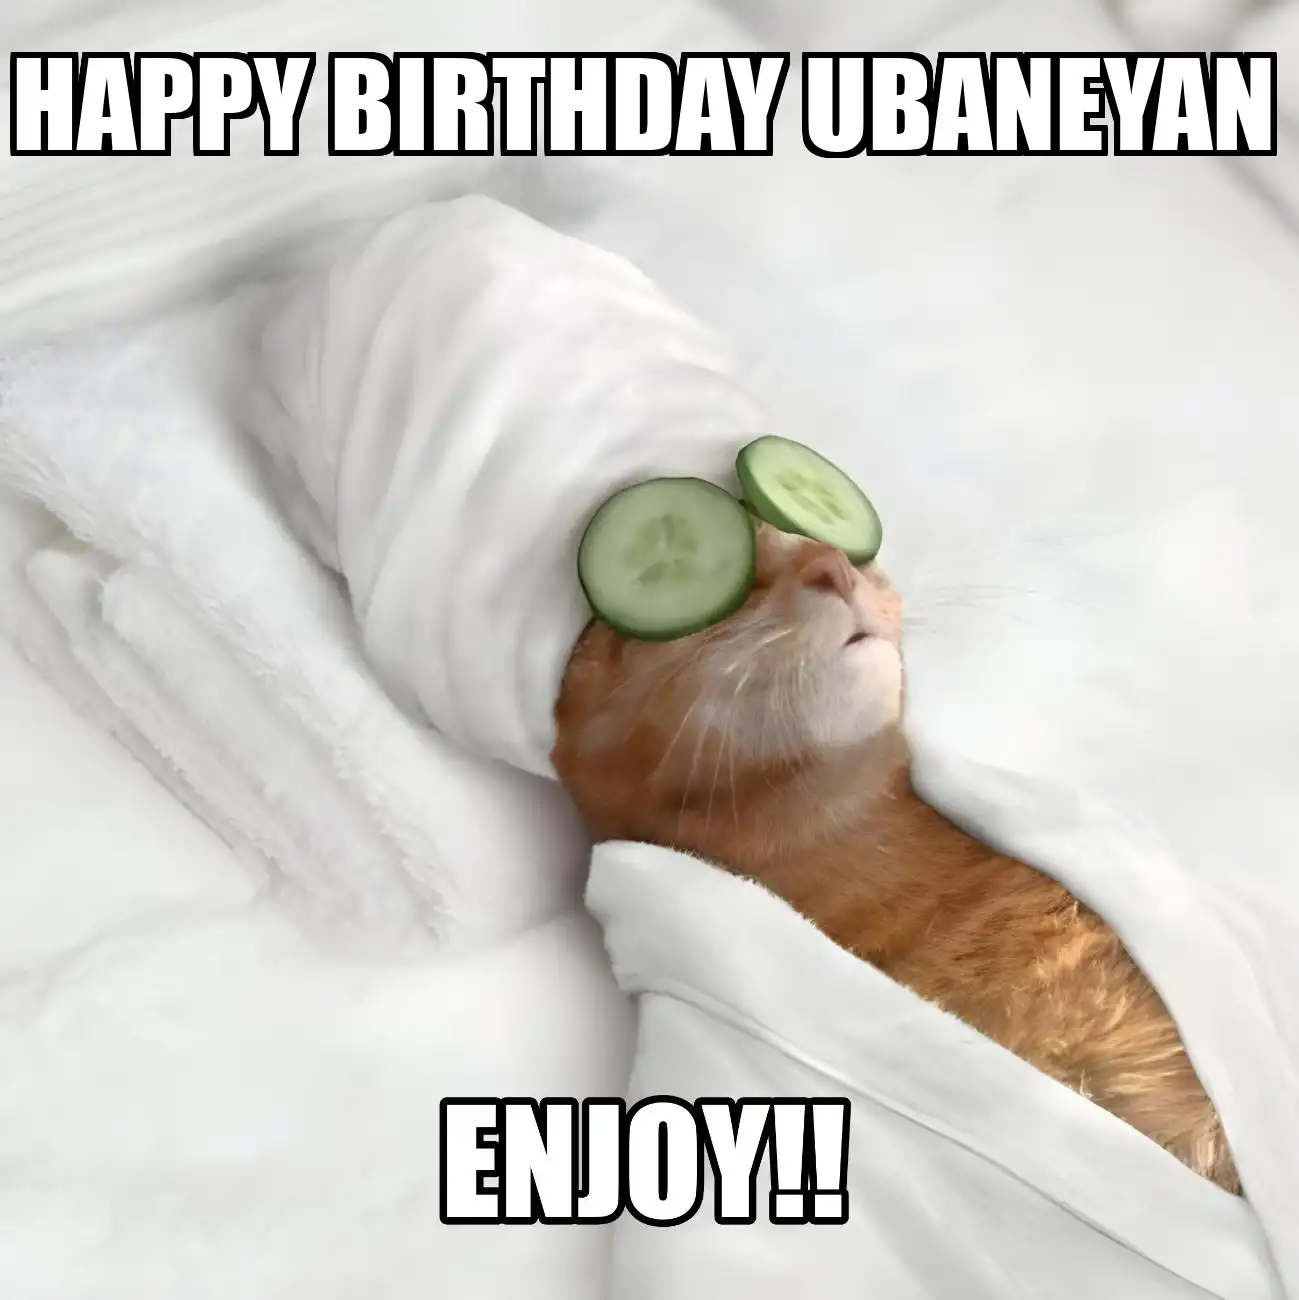 Happy Birthday Ubaneyan Enjoy Cat Meme